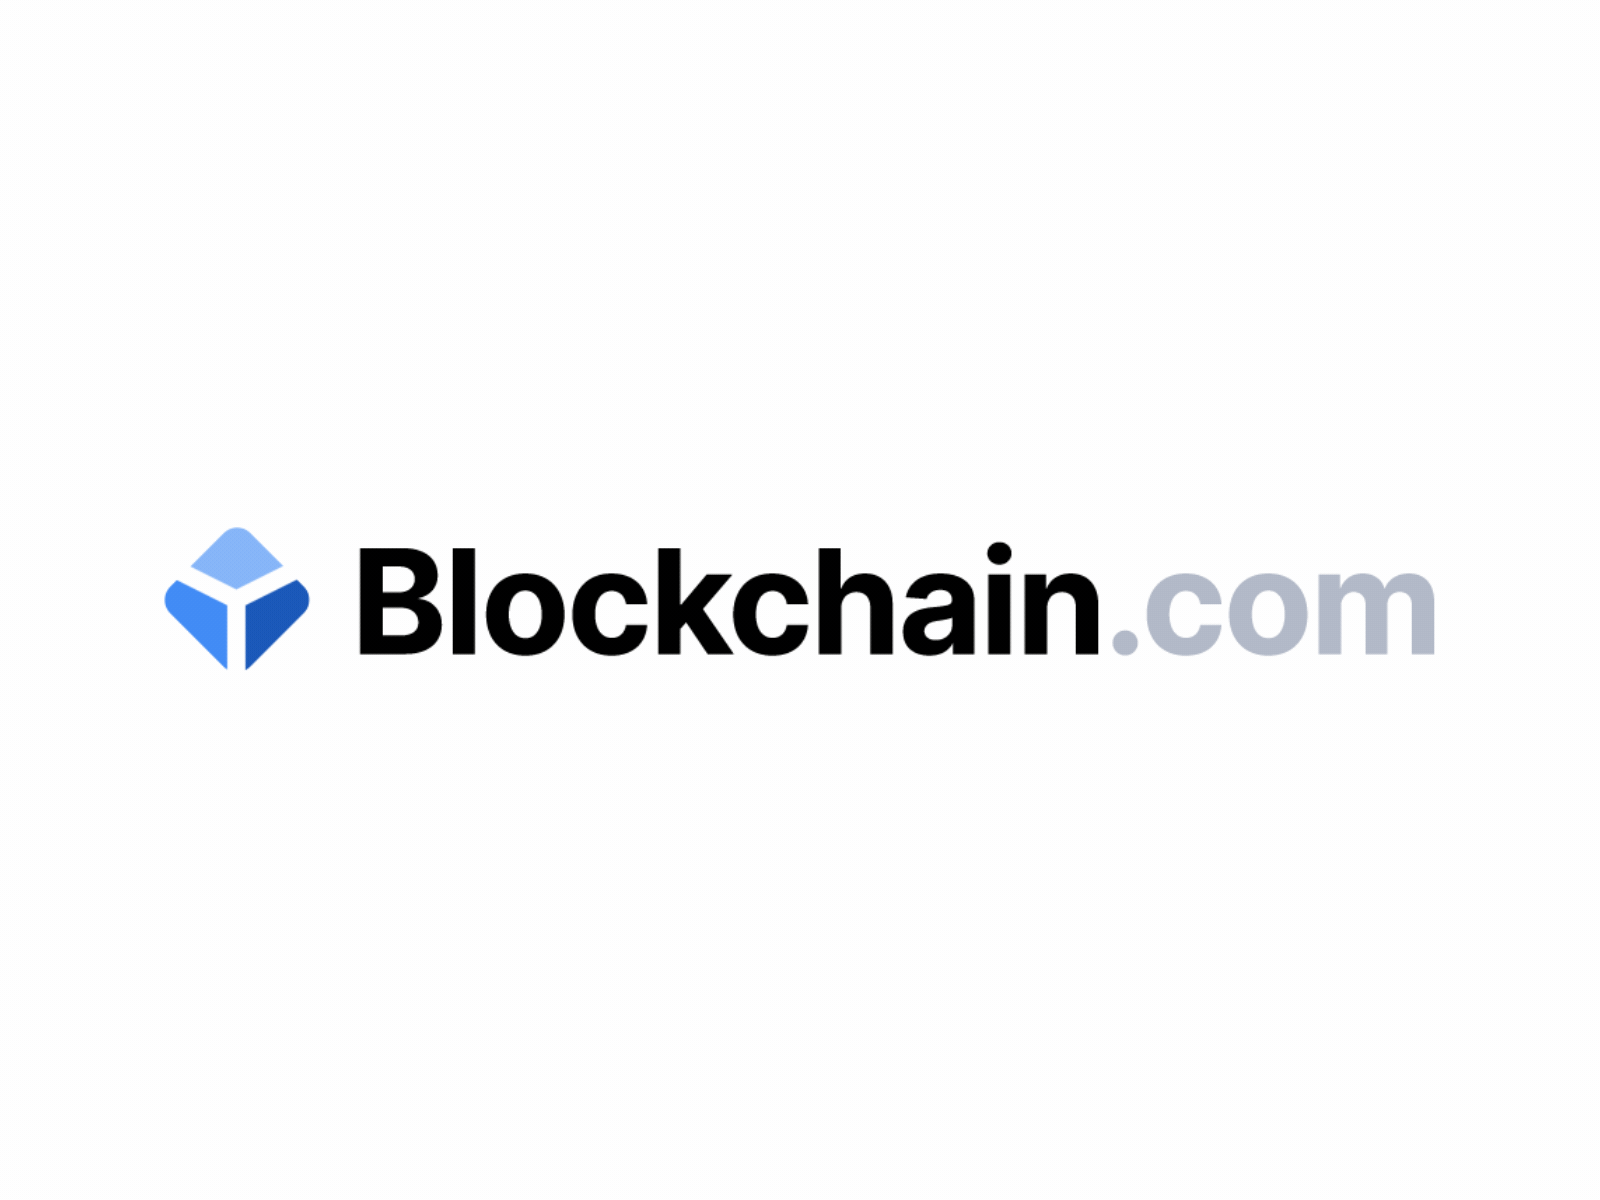 Blockchain.com Brand Refresh